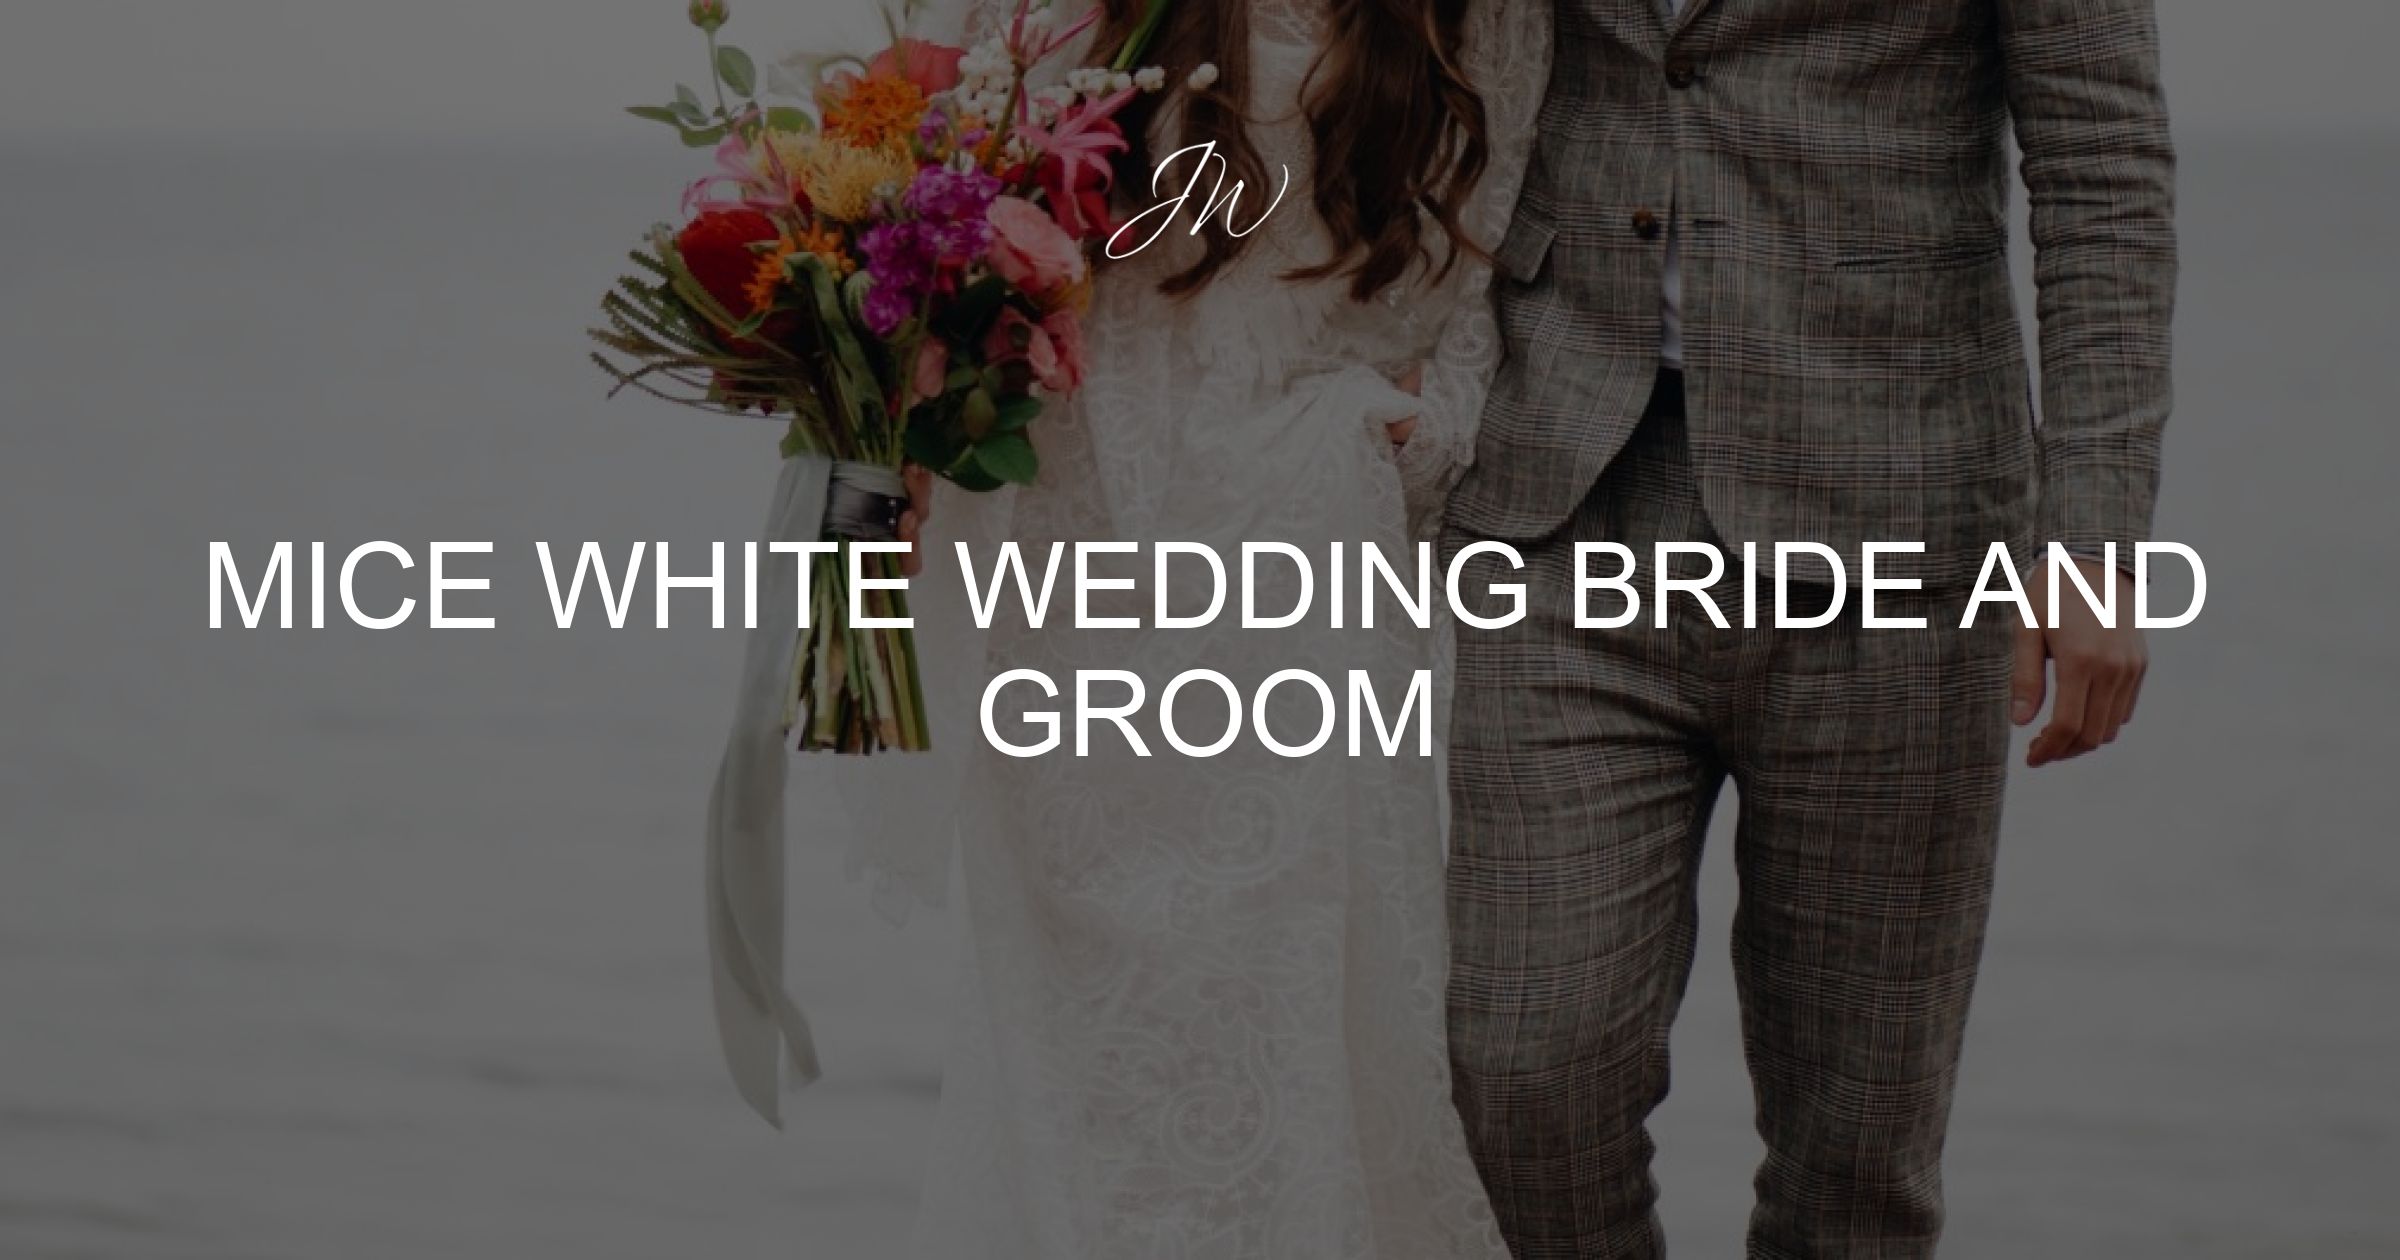 Mice White Wedding Bride and Groom - Jayne Williams Cake Tops